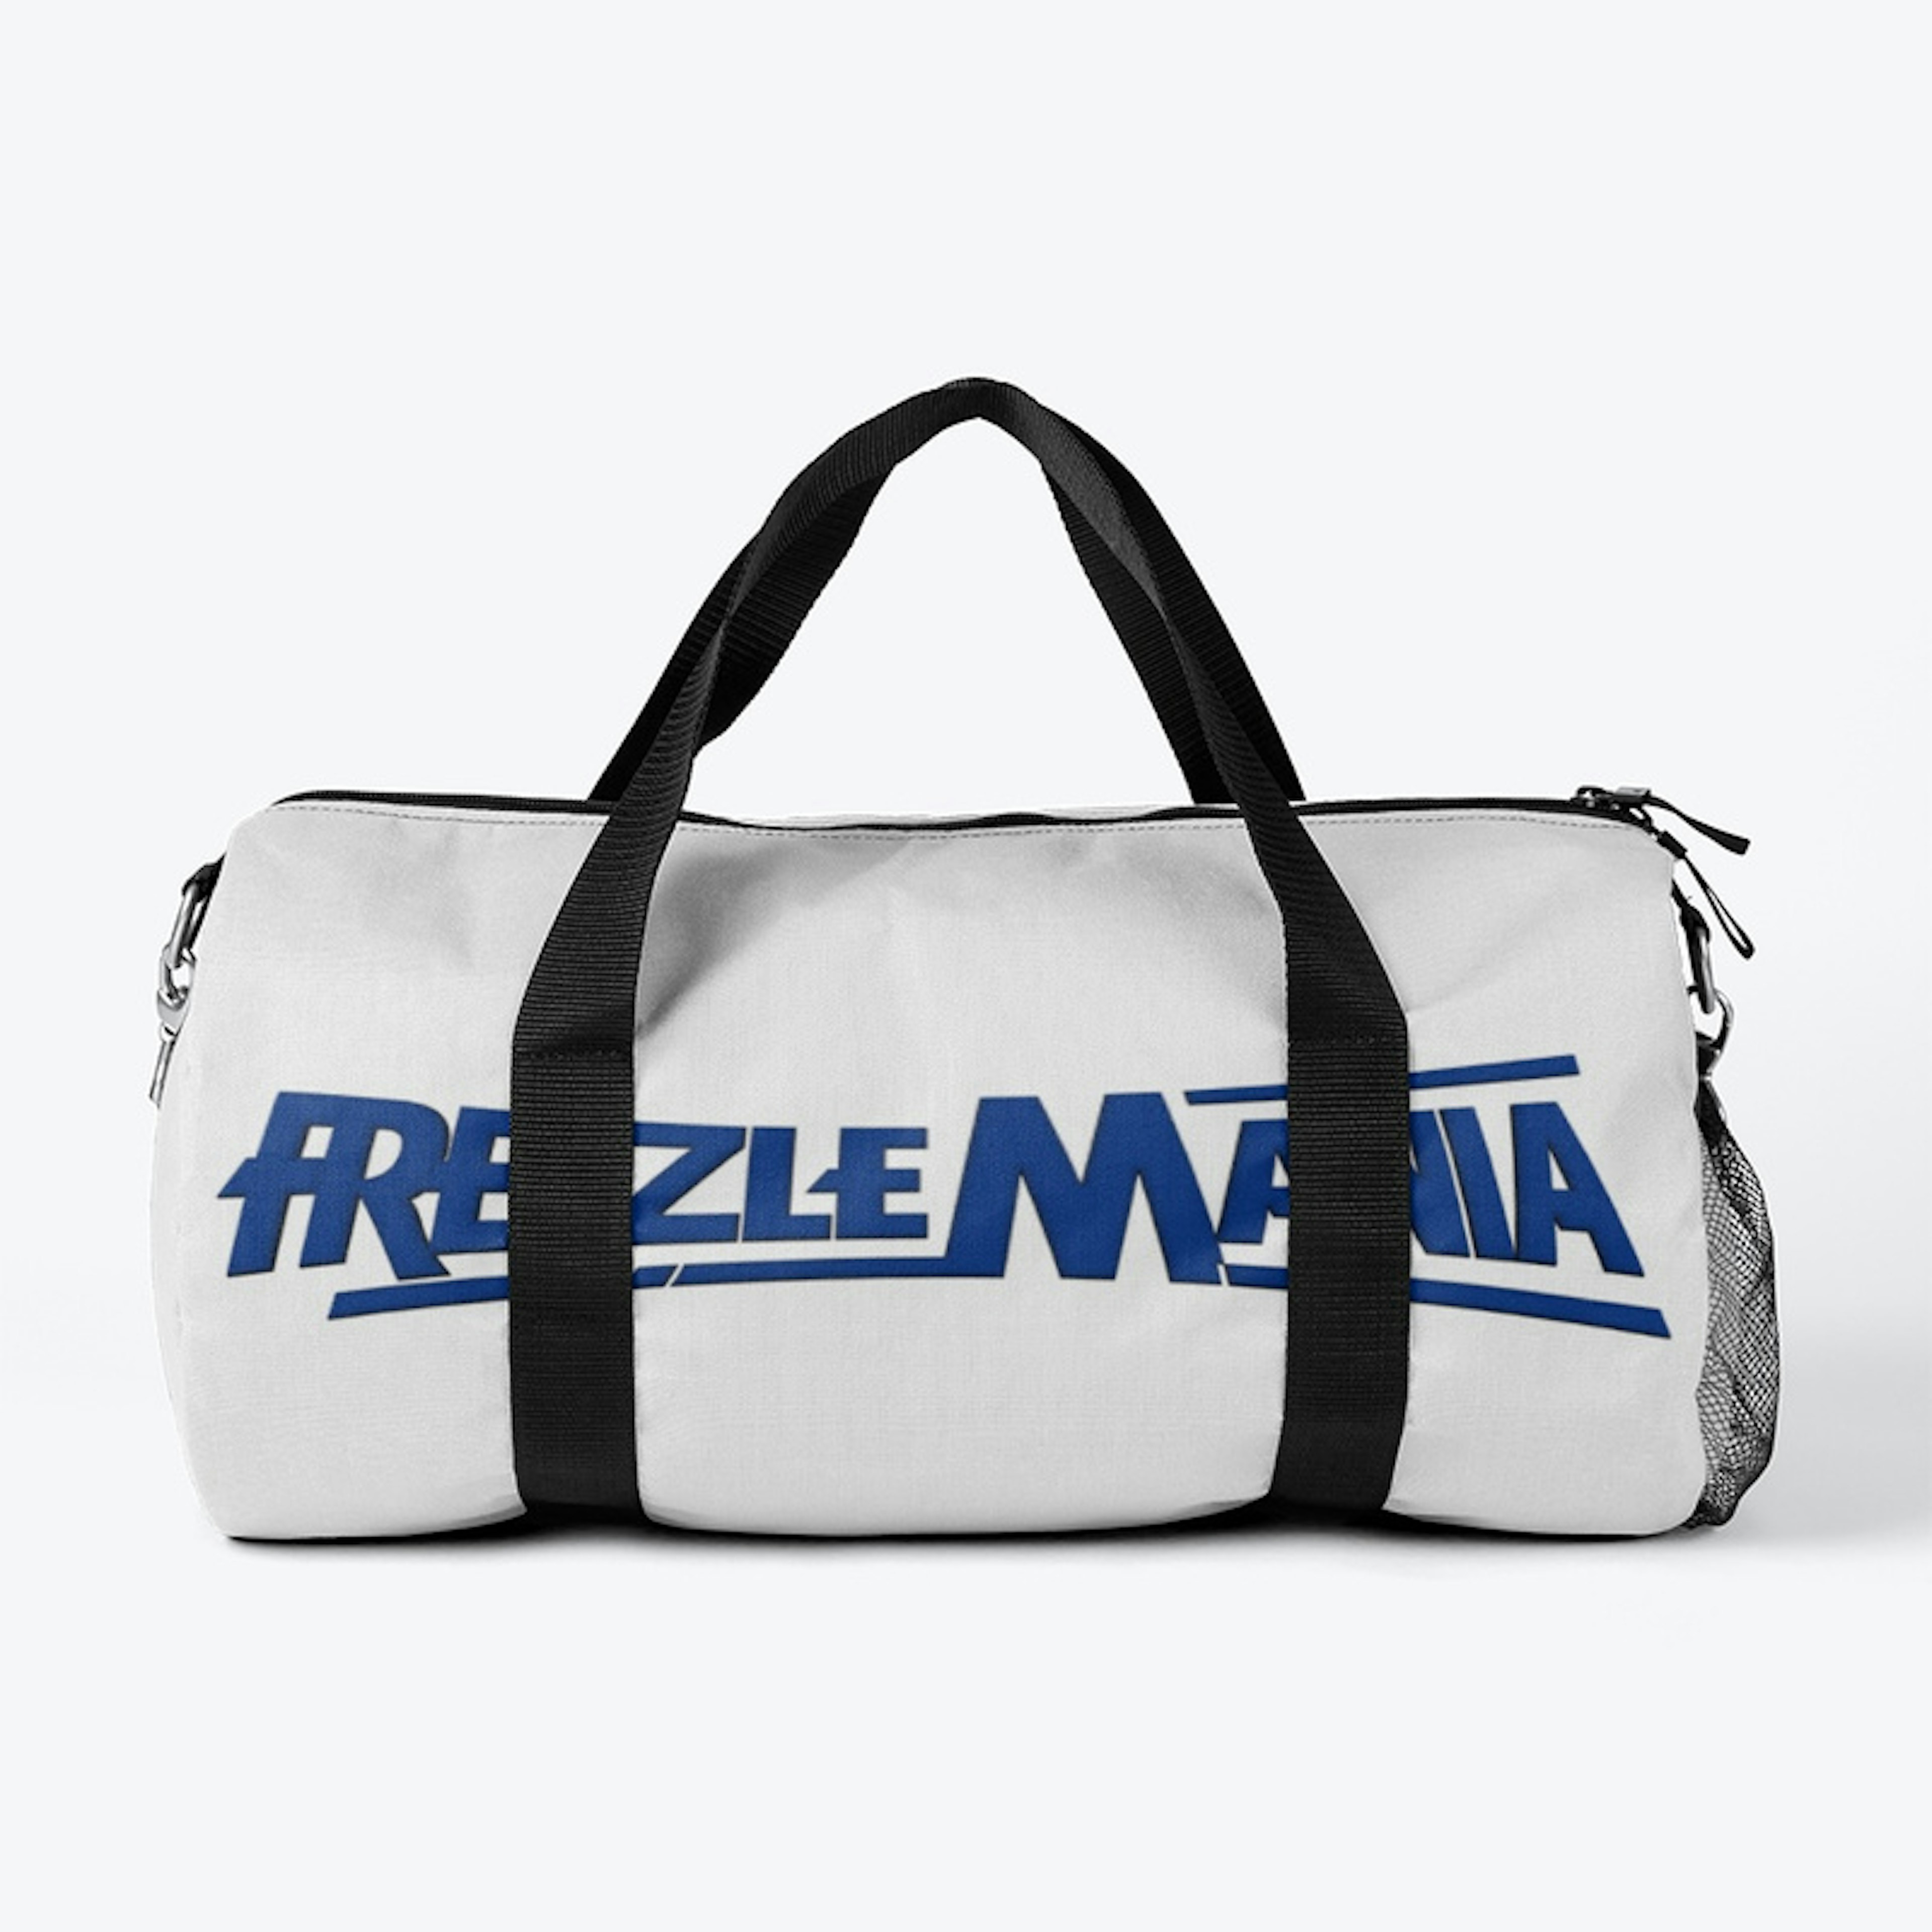 FretzleMania 2.0 Accessories Collection